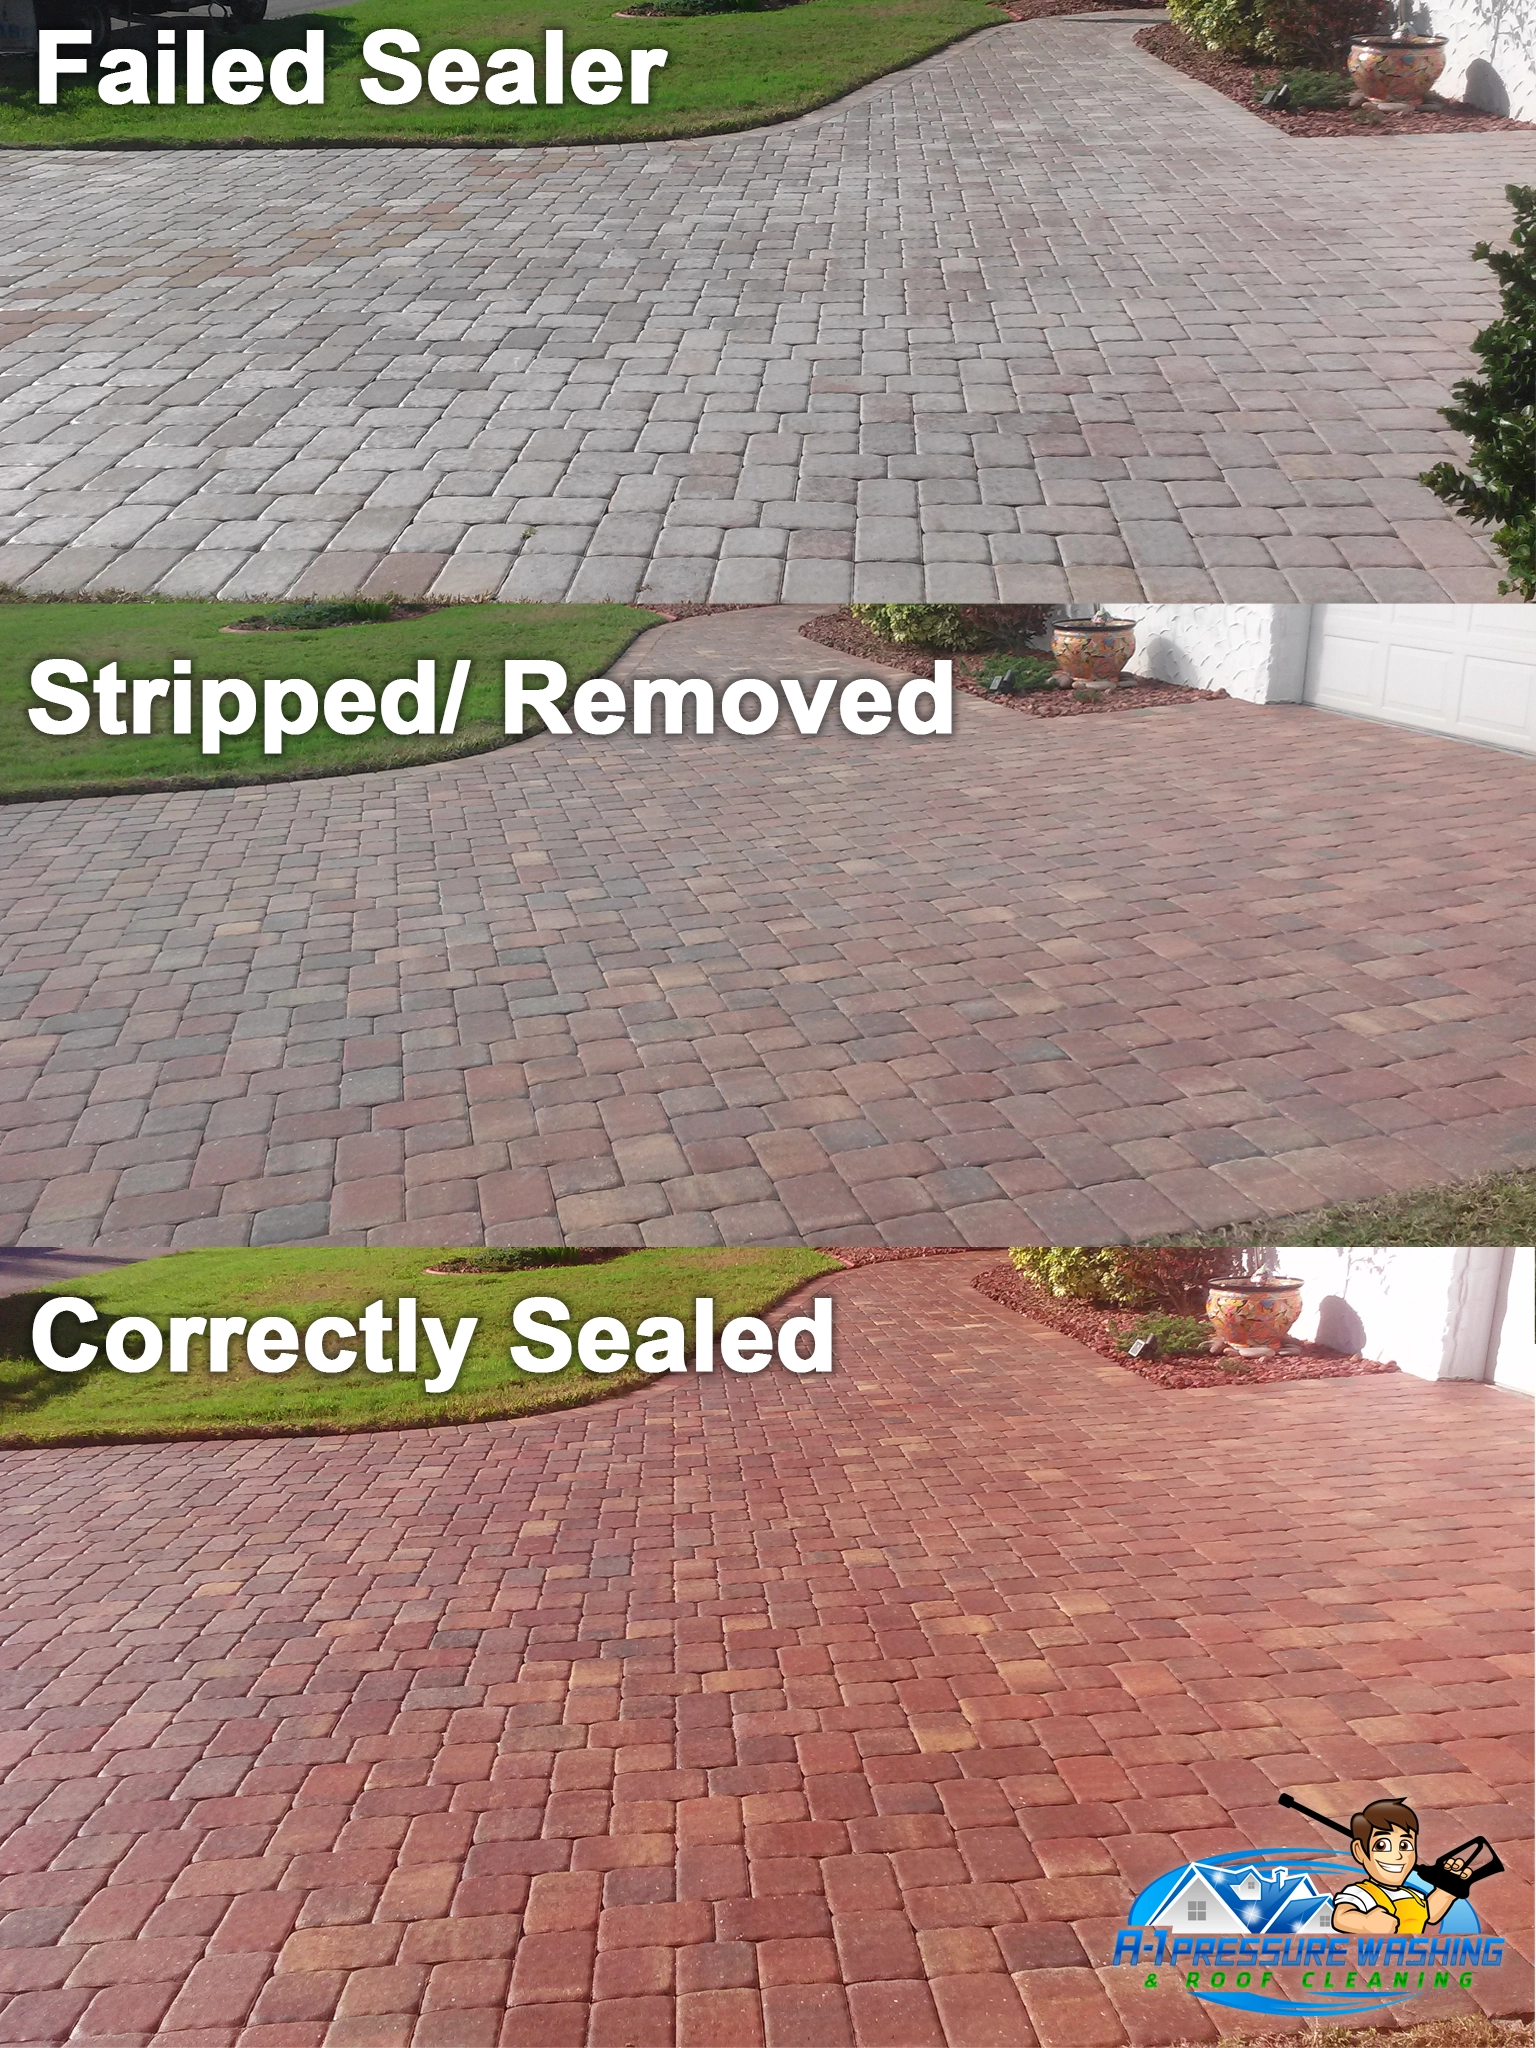 Brick Paver Restoration, Strip Failing Sealer | A-1 Pressure Washing & Roof Cleaning | 941-815-8454 